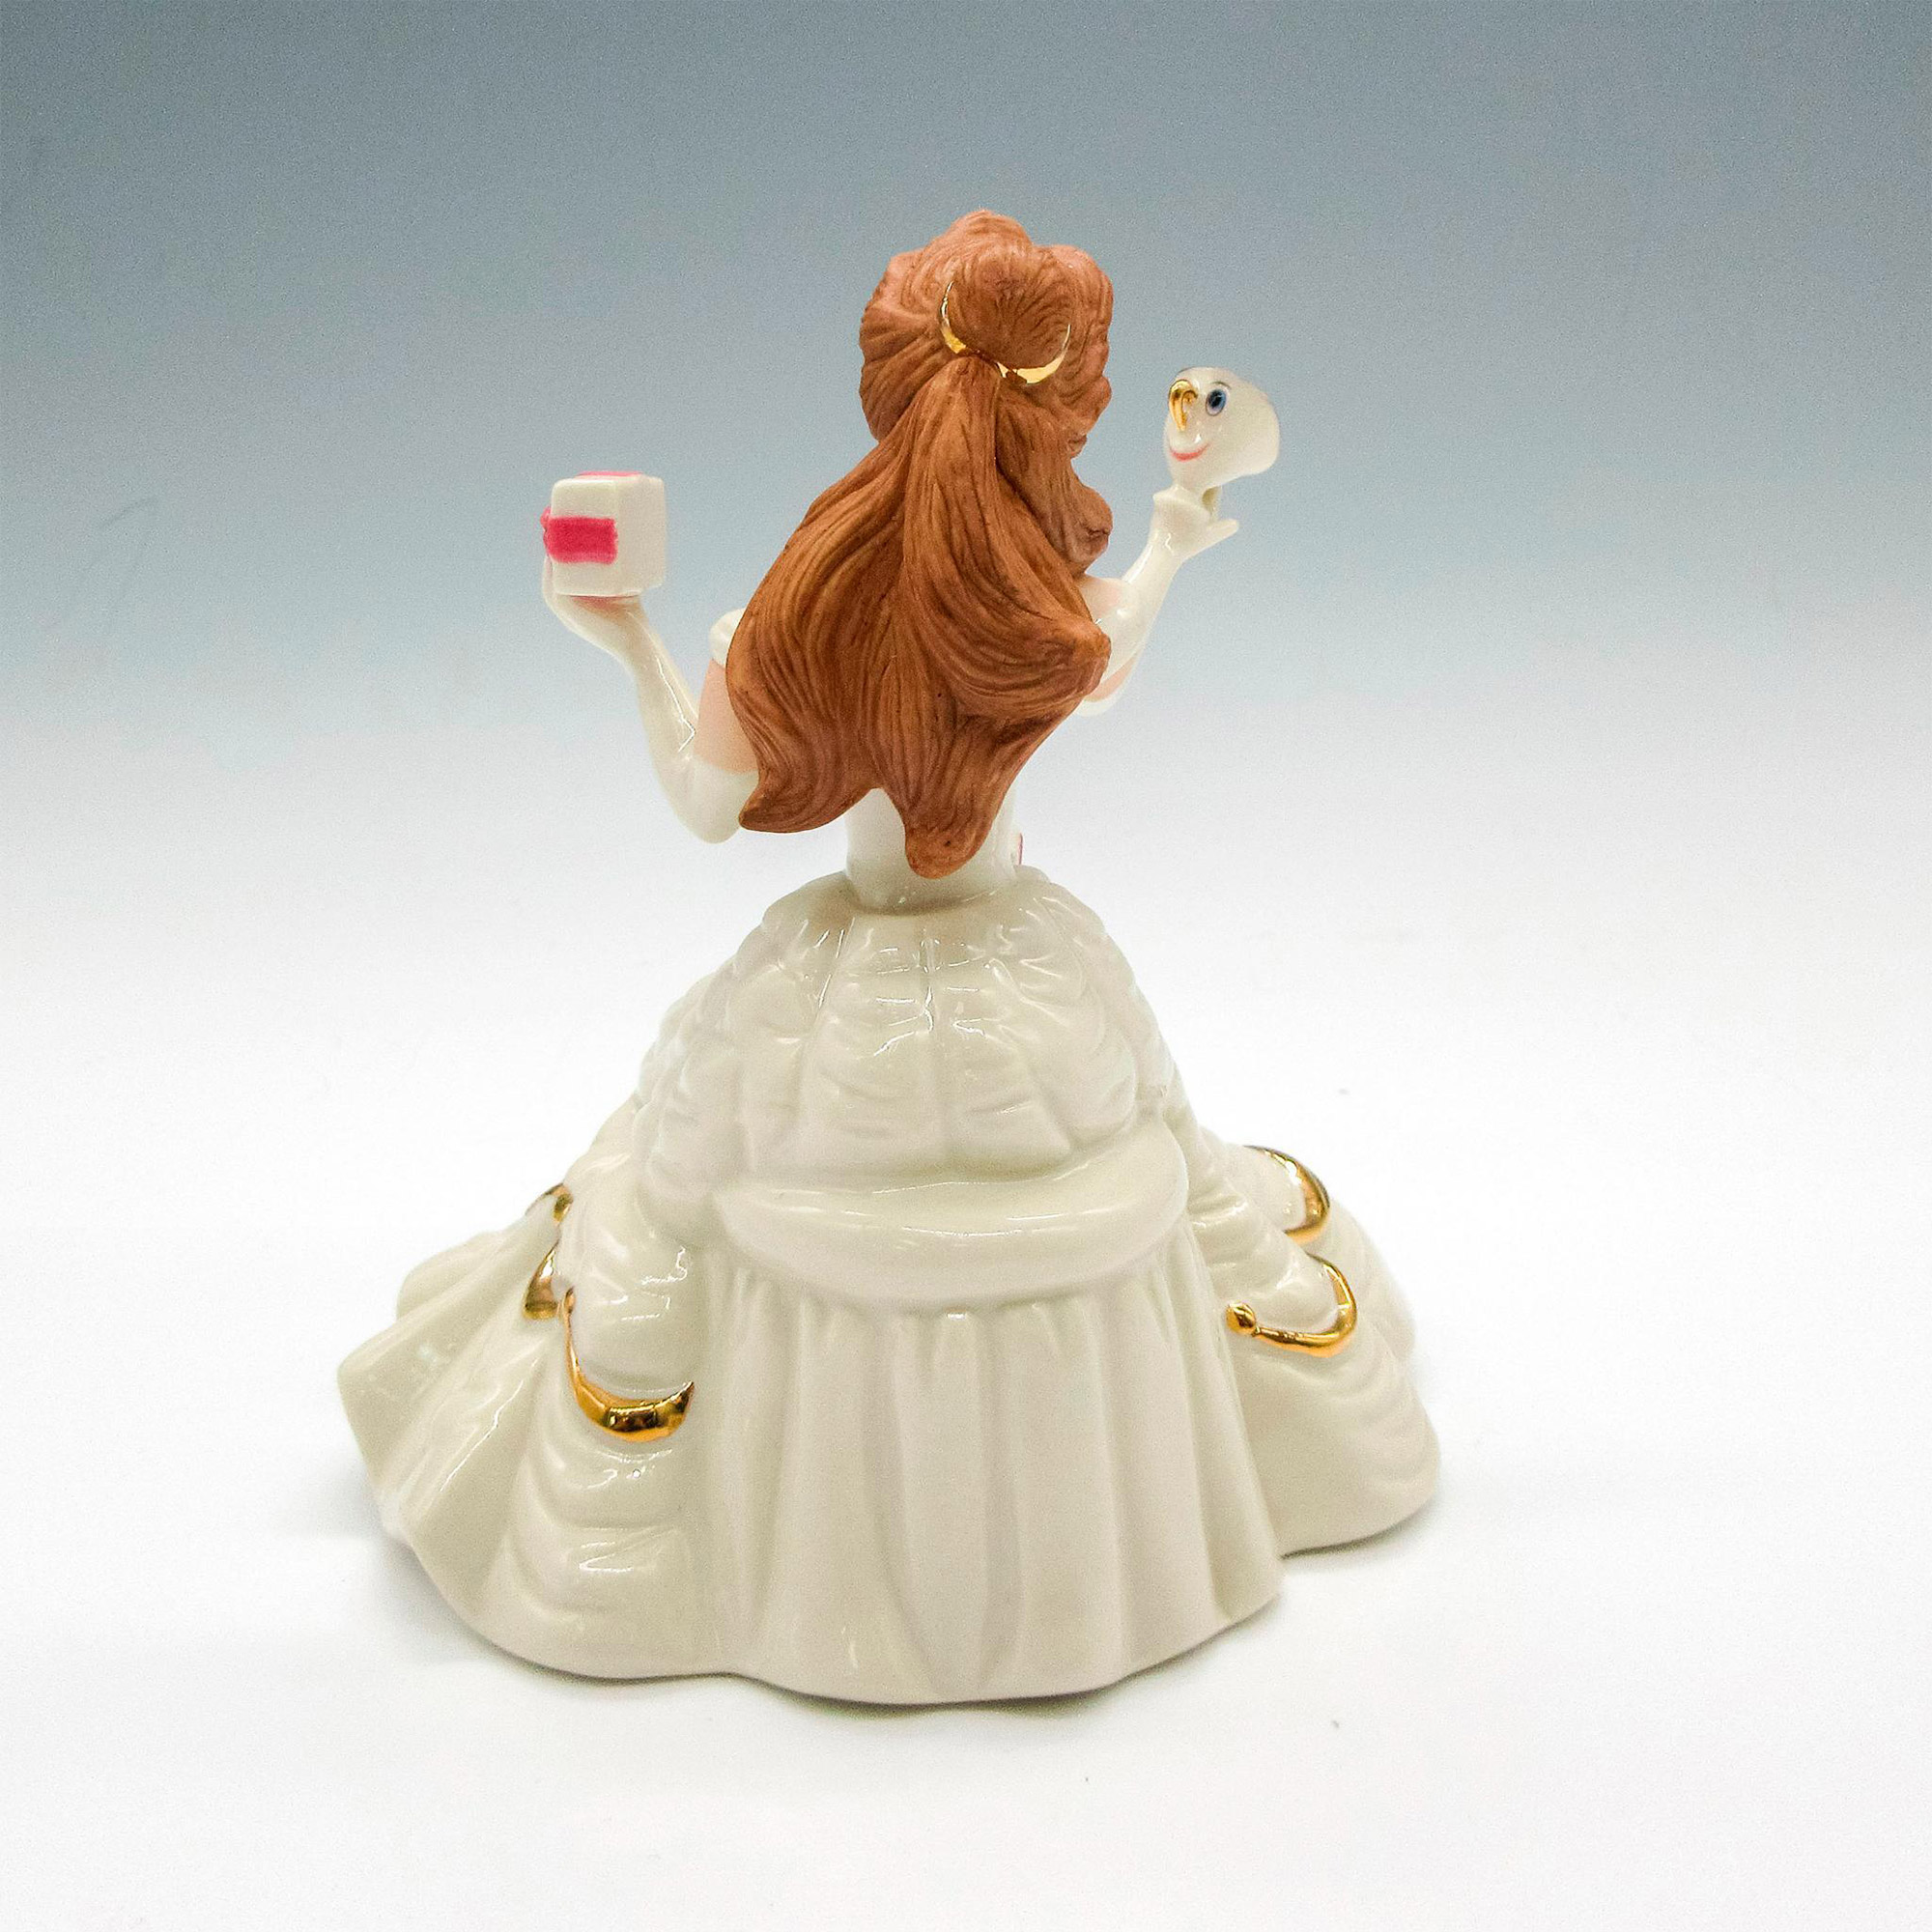 Lenox Disney Porcelain Figurines, Belle's Birthday Surprise - Image 2 of 3